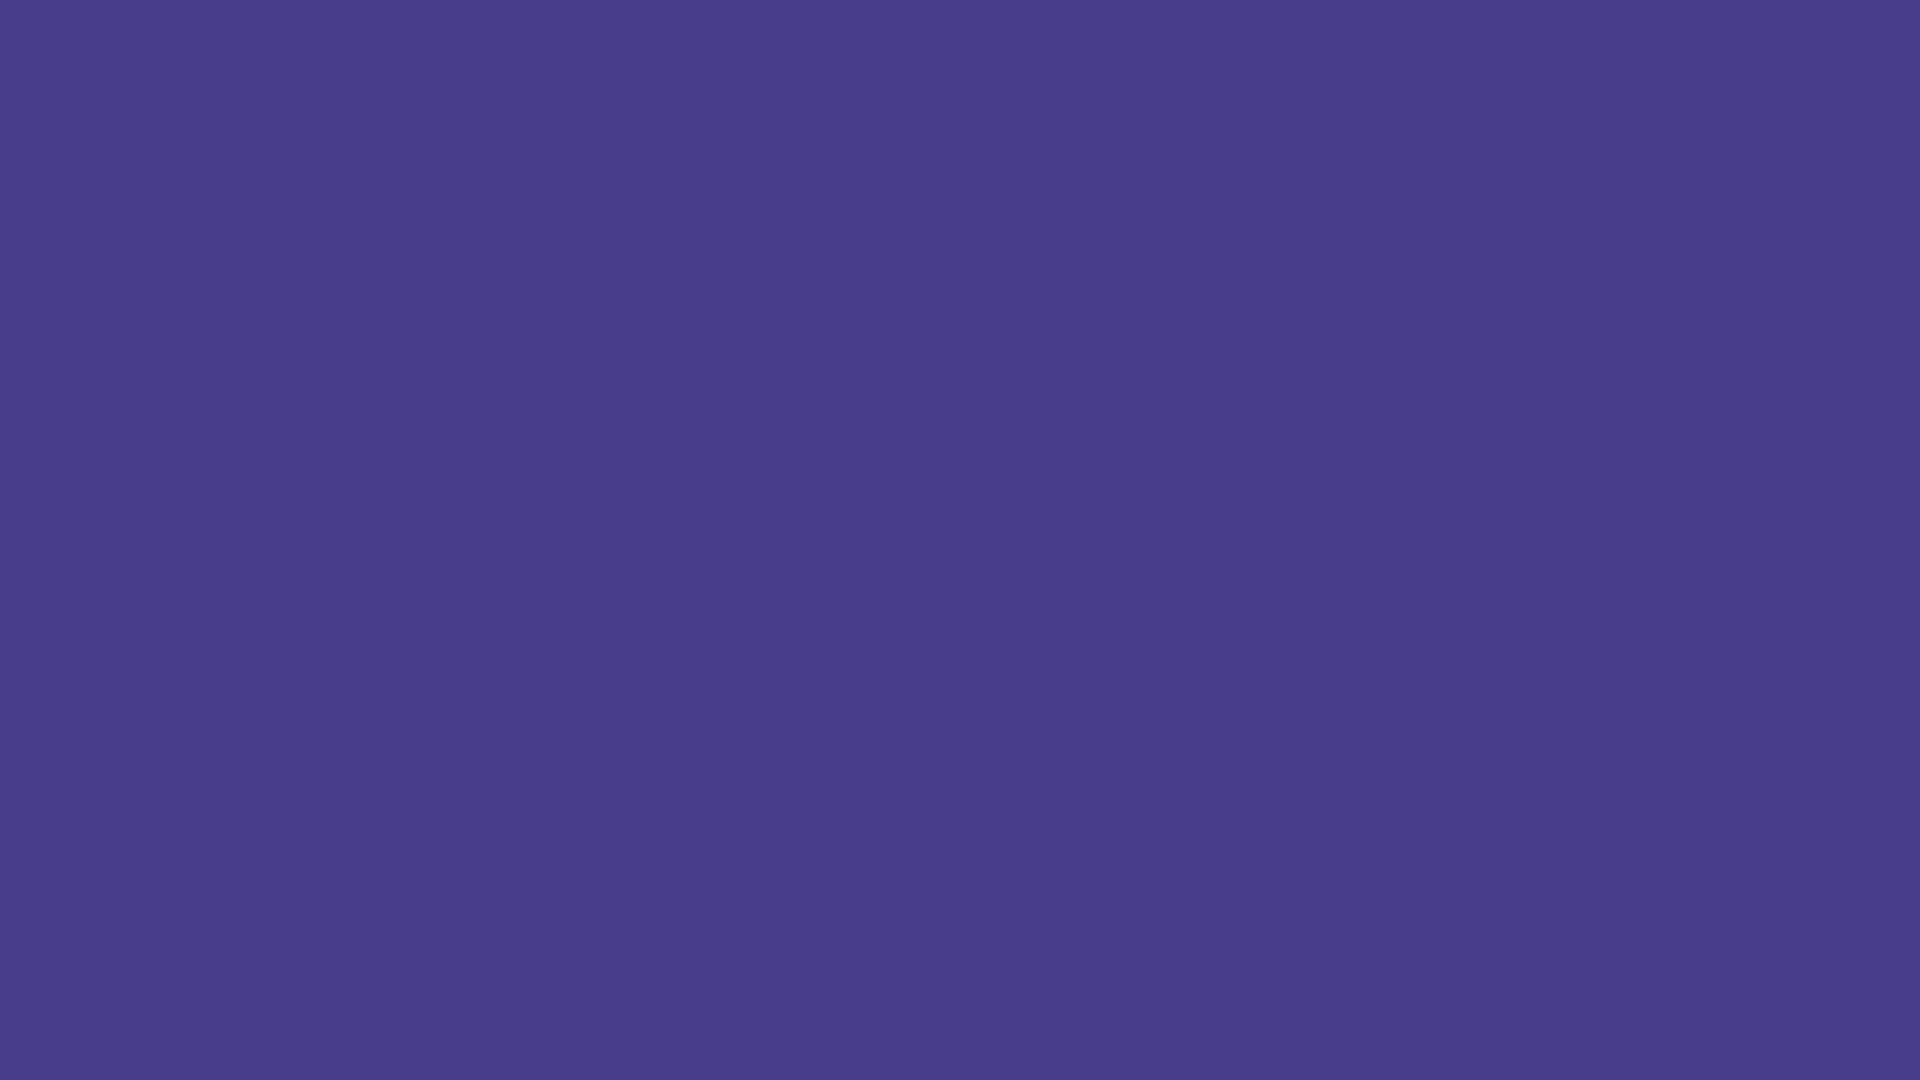 1920x1080 Dark Slate Blue Solid Color Background